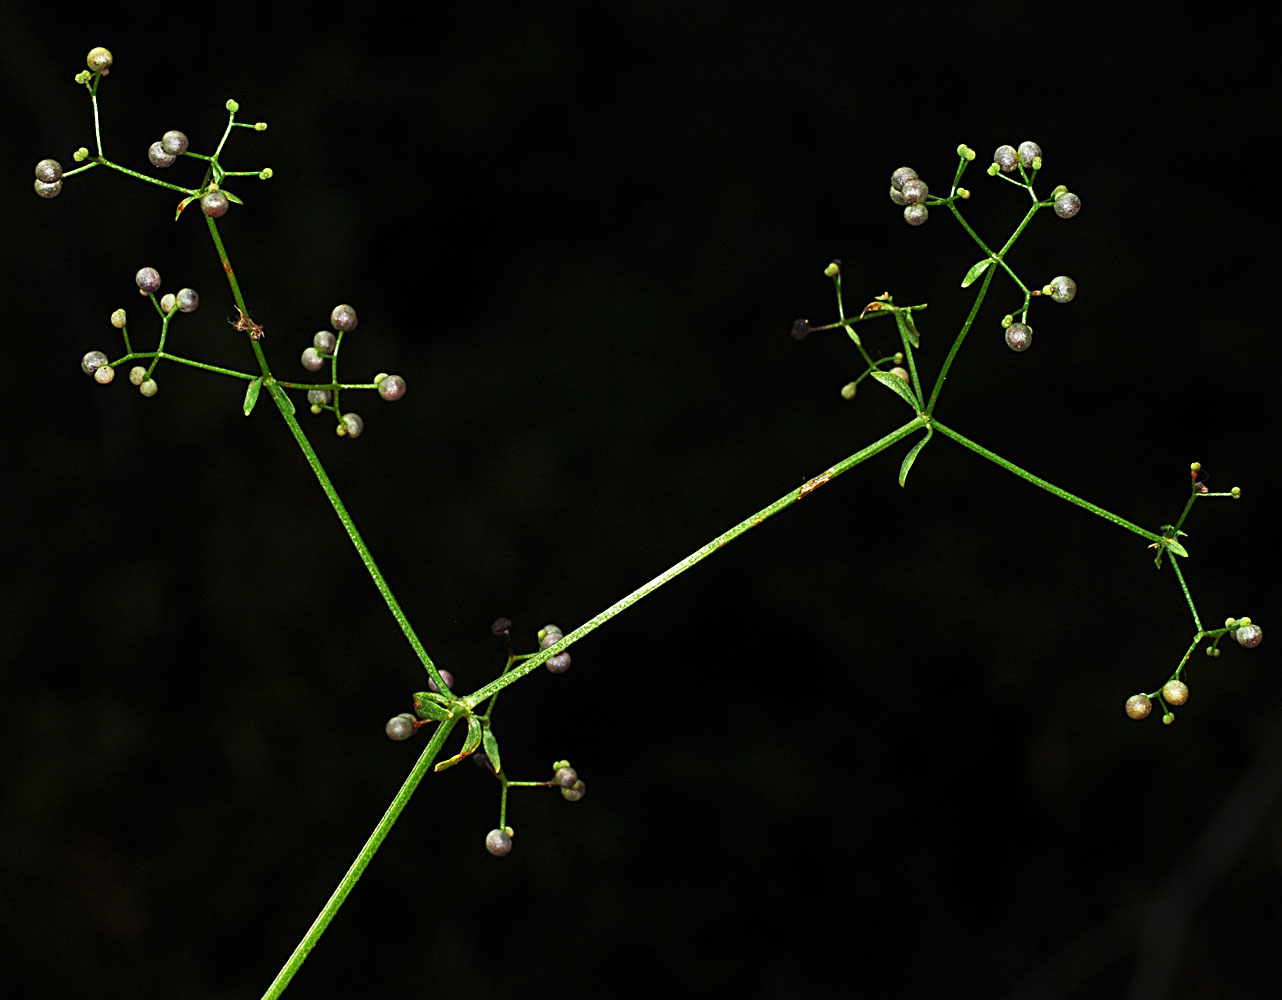 Flora of Eastern Washington Image: Galium trifidum